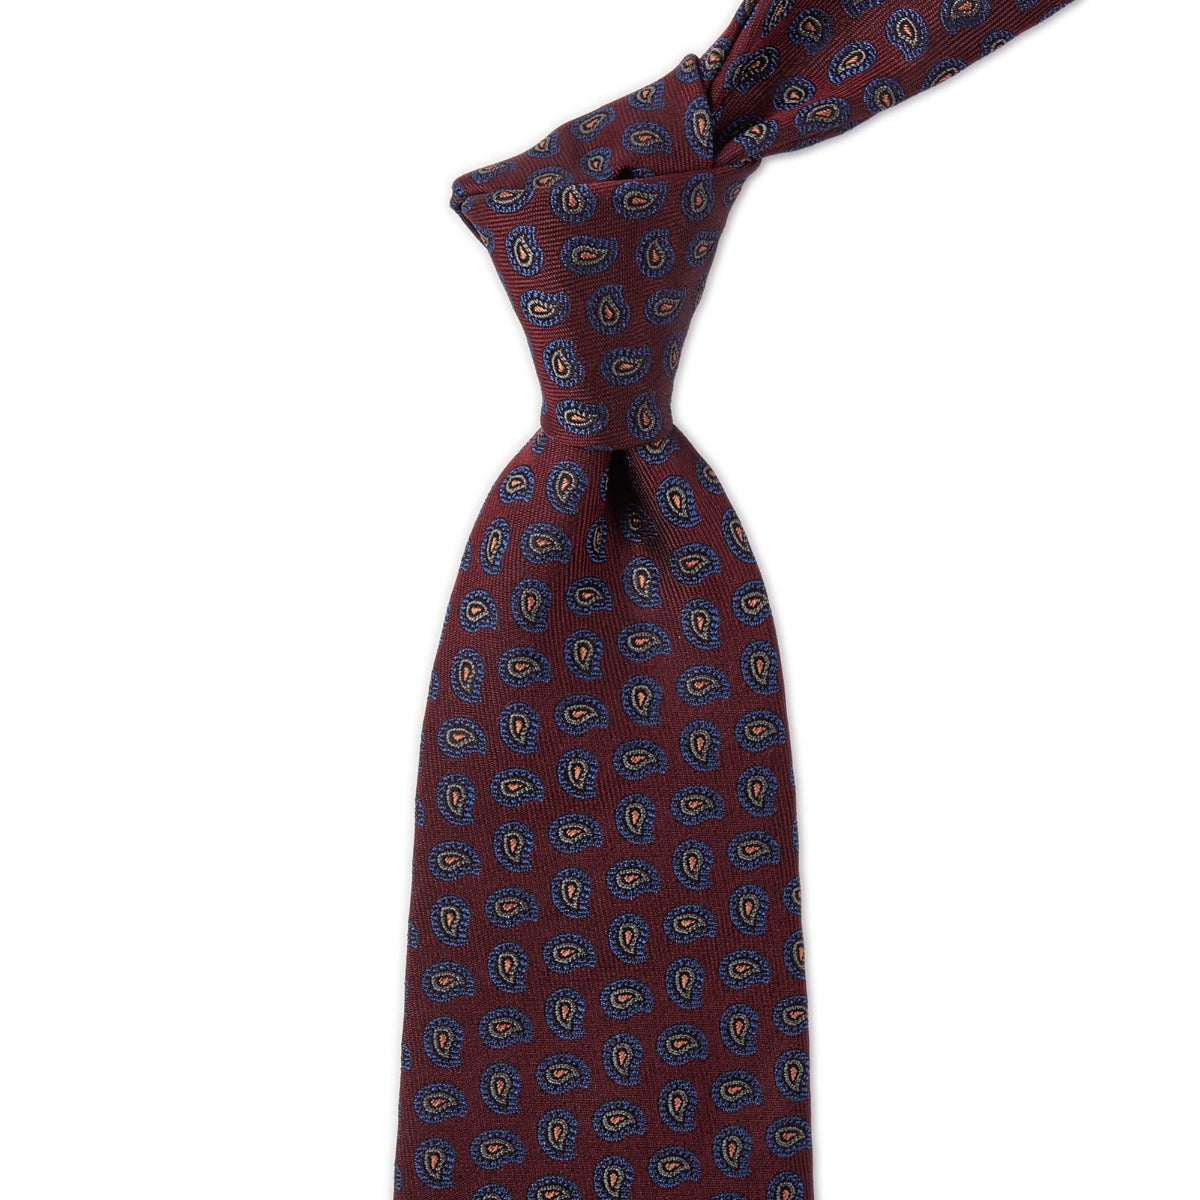 A Sovereign Grade Burgundy Paisley Jacquard Silk Tie by KirbyAllison.com, showcasing quality craftsmanship.